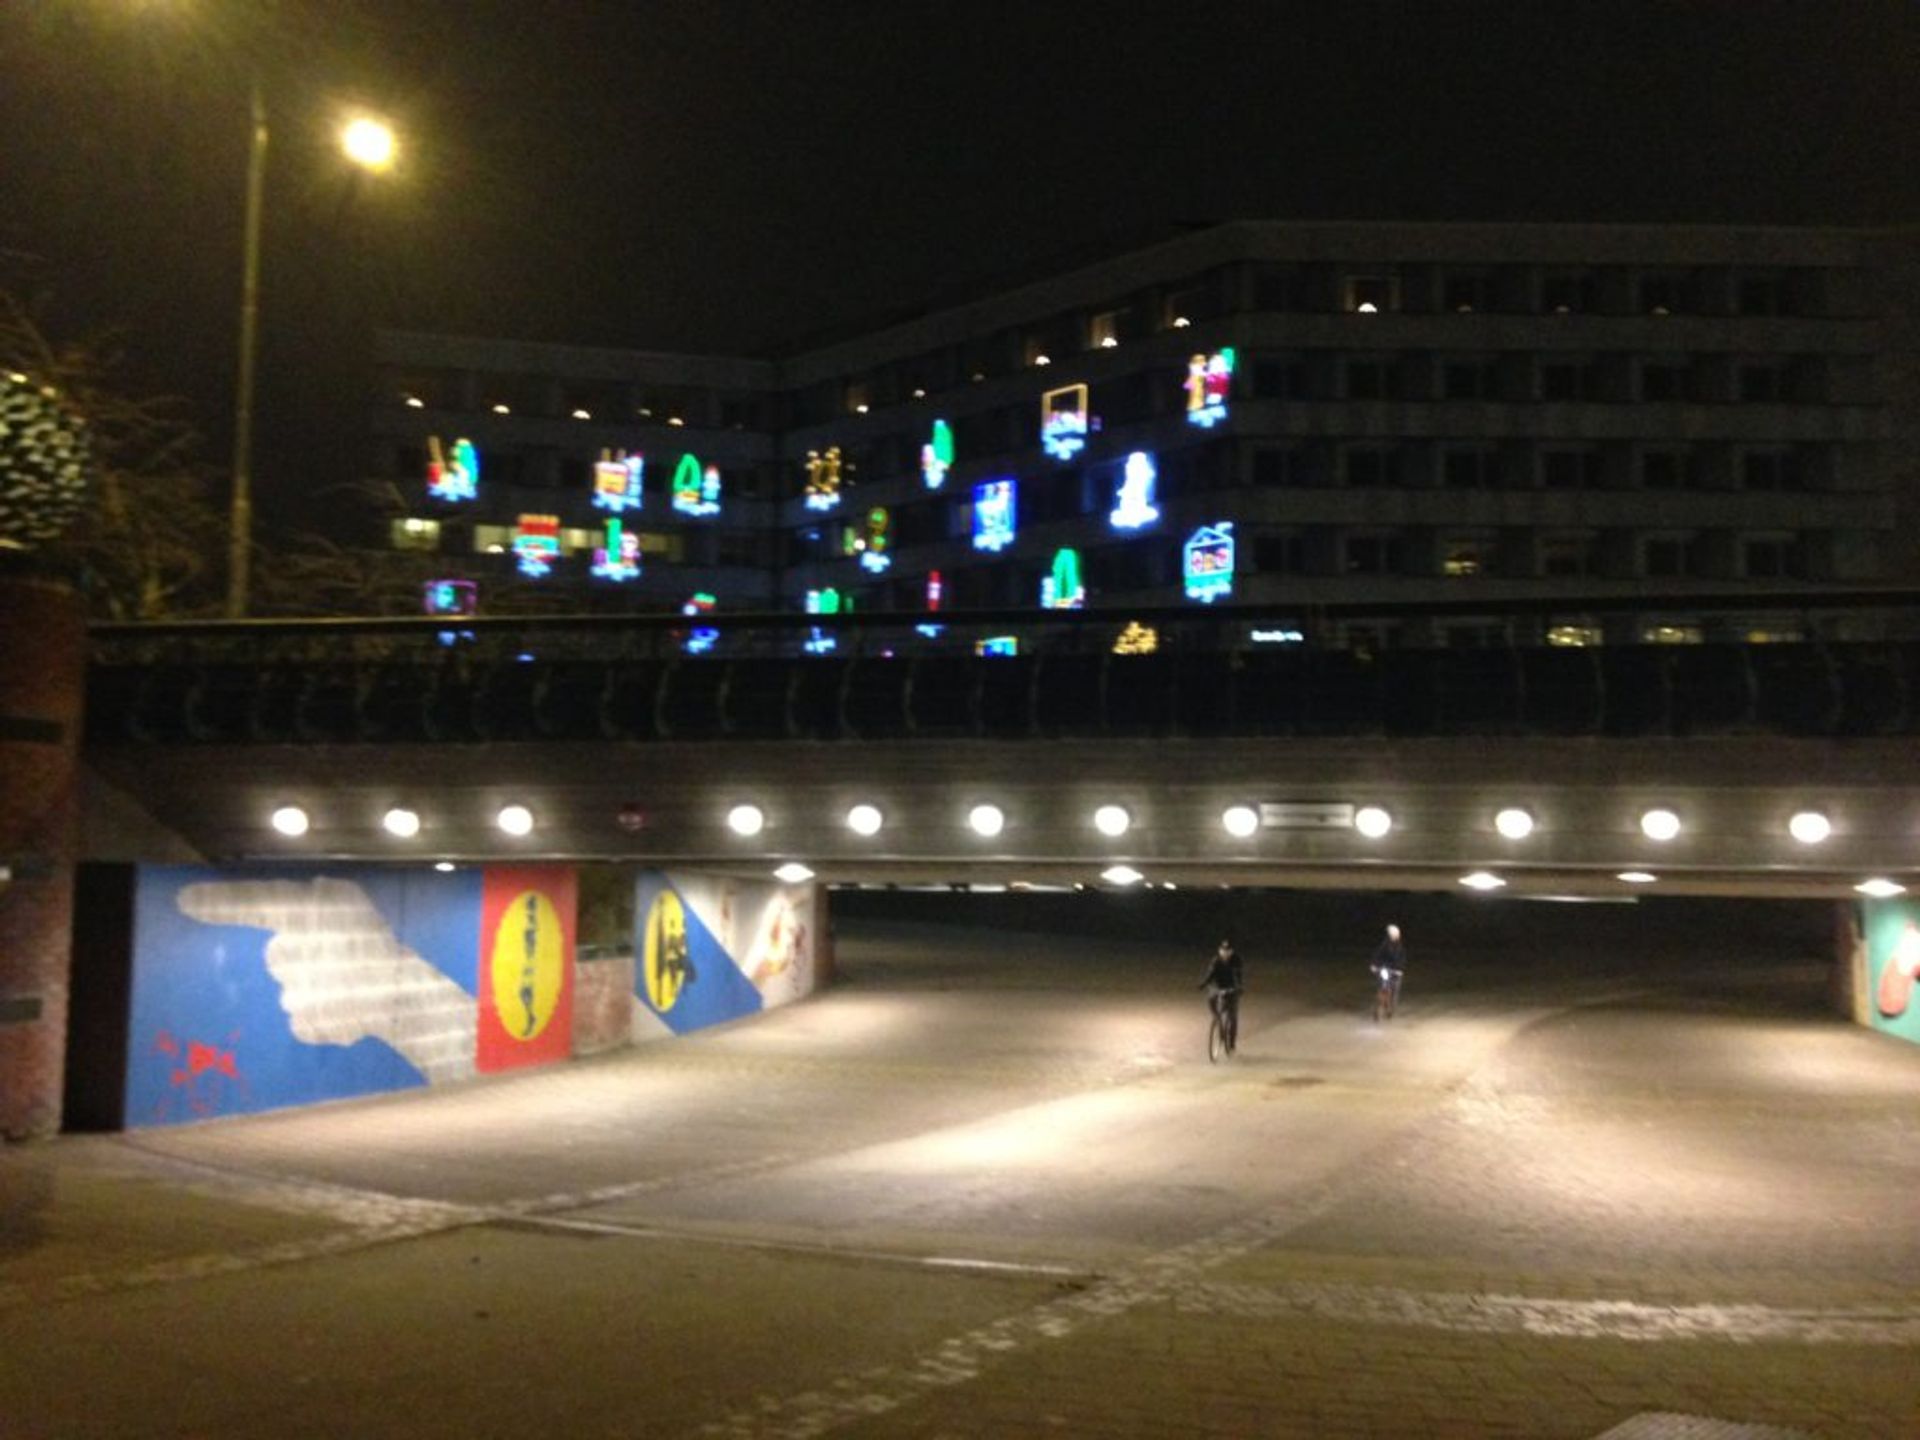 Nighttime in Malmö, December 2017